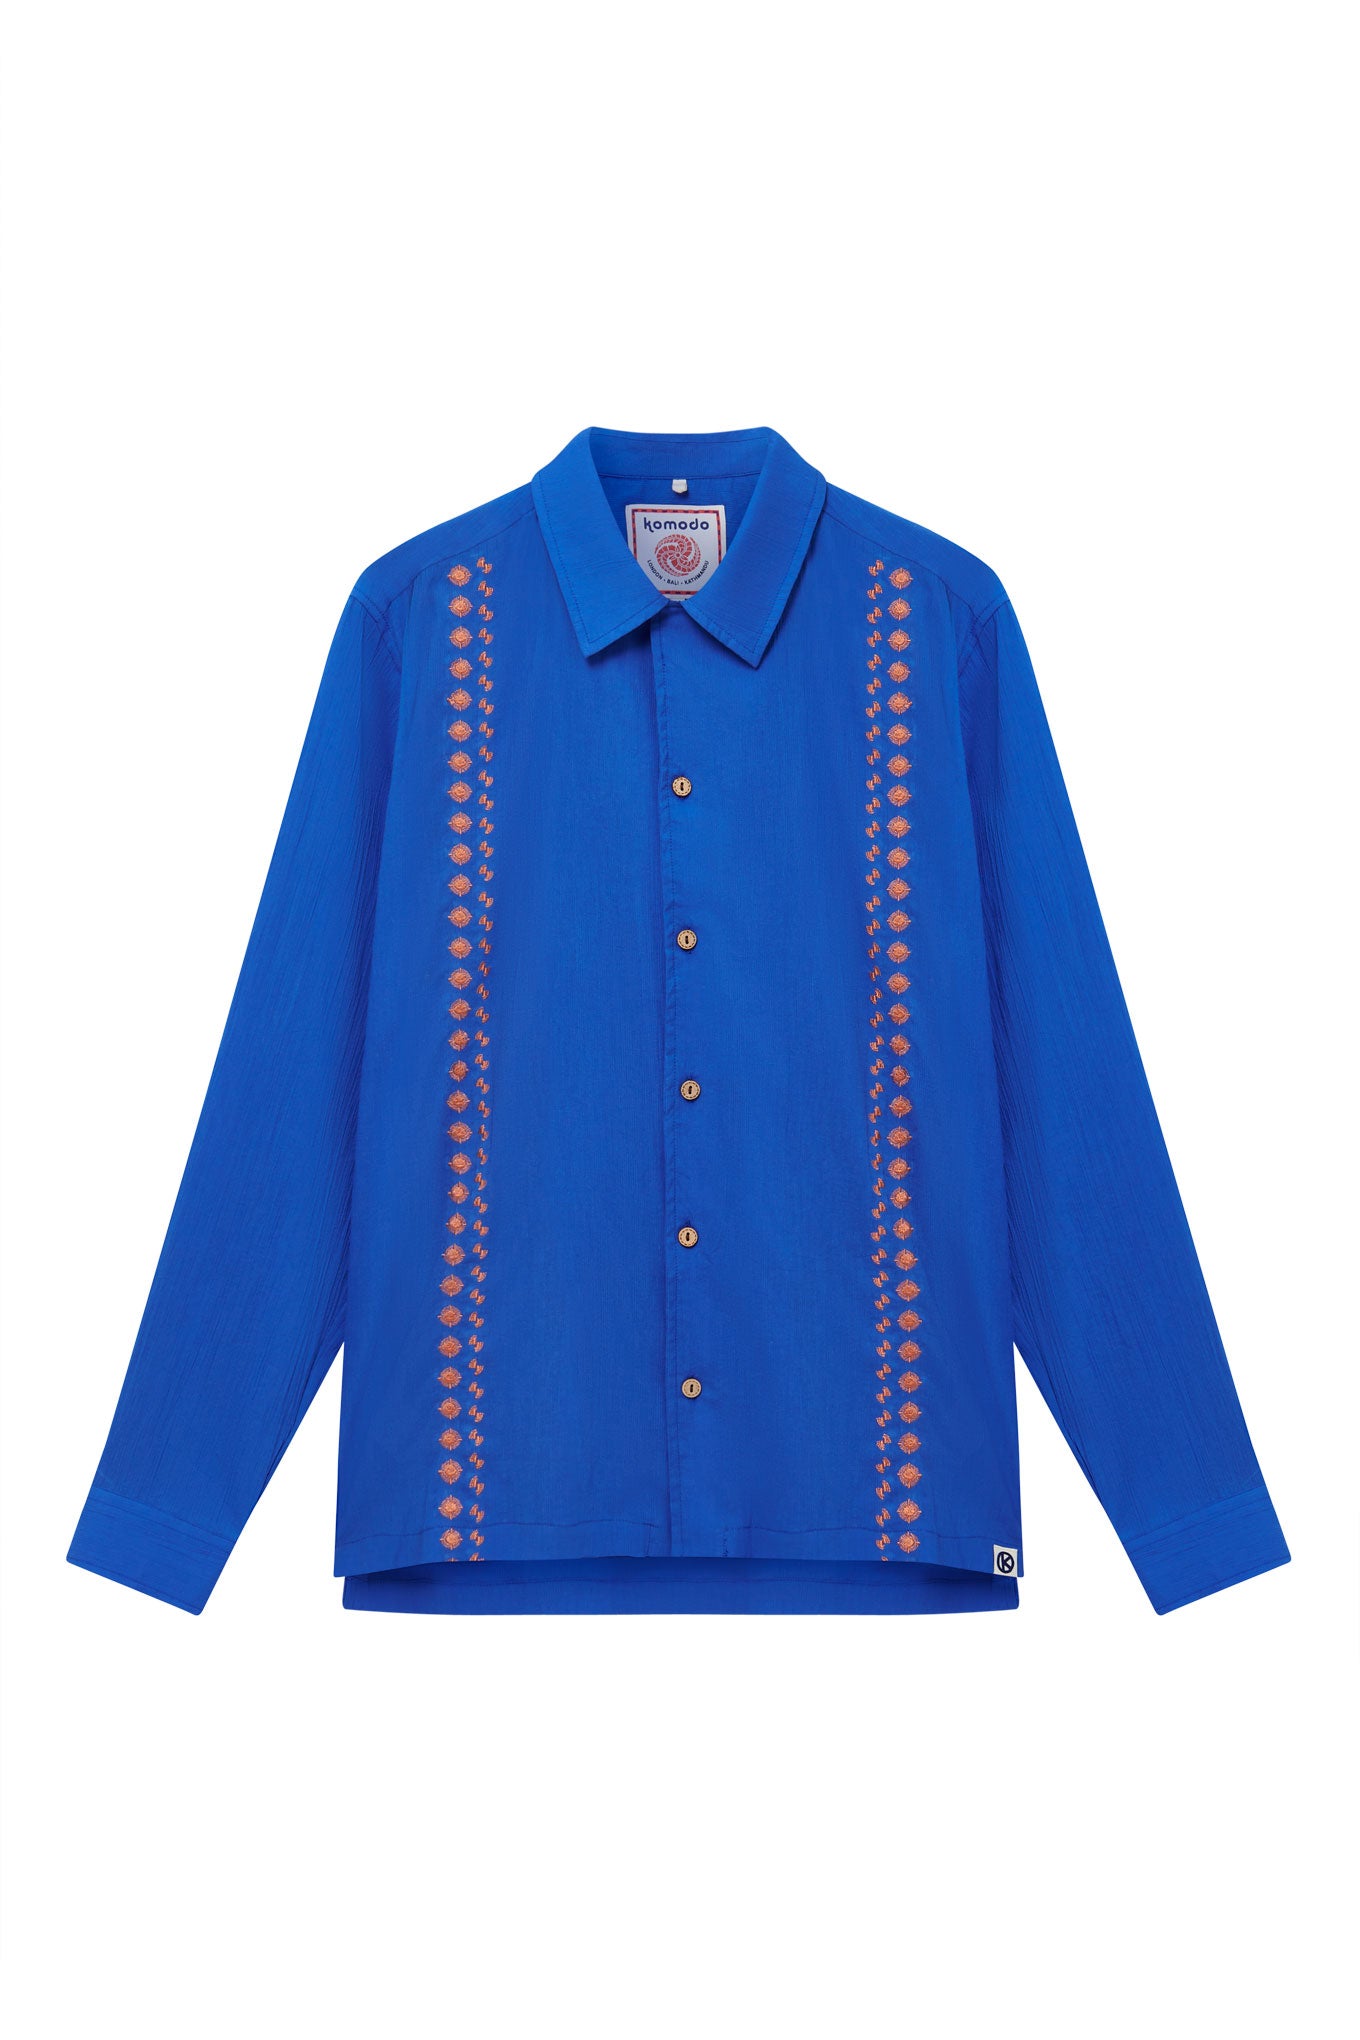 Shop Komodo Men's Nile - Organic Cotton Shirt Bali Fans Embroidery Sapphire Blue